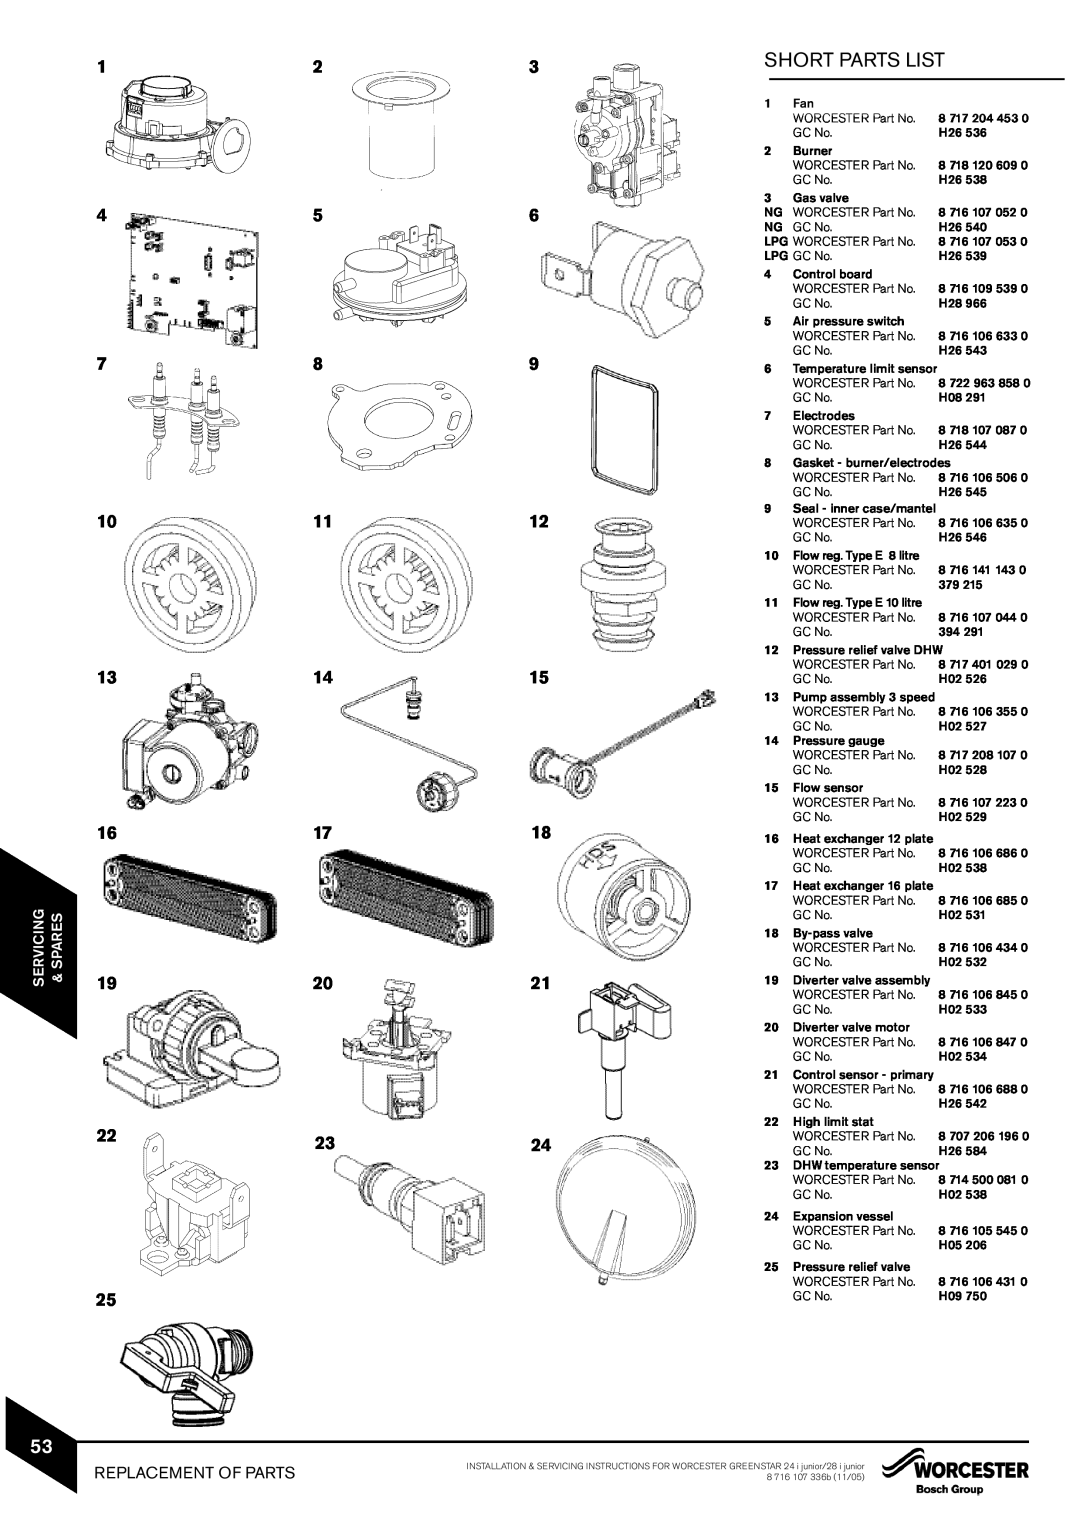 Bosch Appliances 28i junior, 24i junior Short Parts List, 1112 1415 1718 2021 2324, Replacement Of Parts, Servicing Spares 